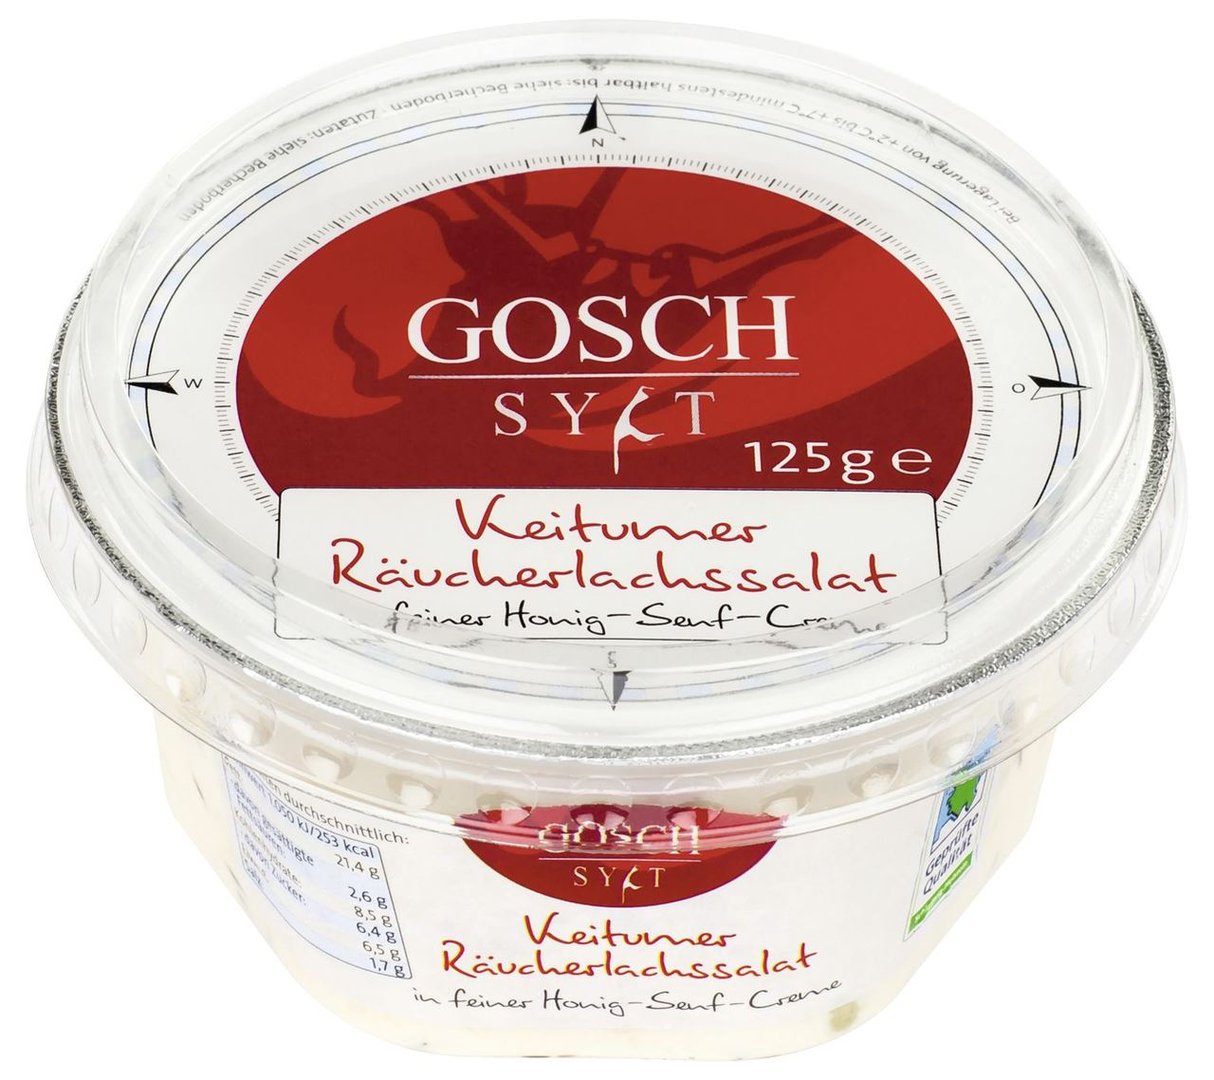 Gosch - Keitumer Räucherlachssalat - 125 g Becher